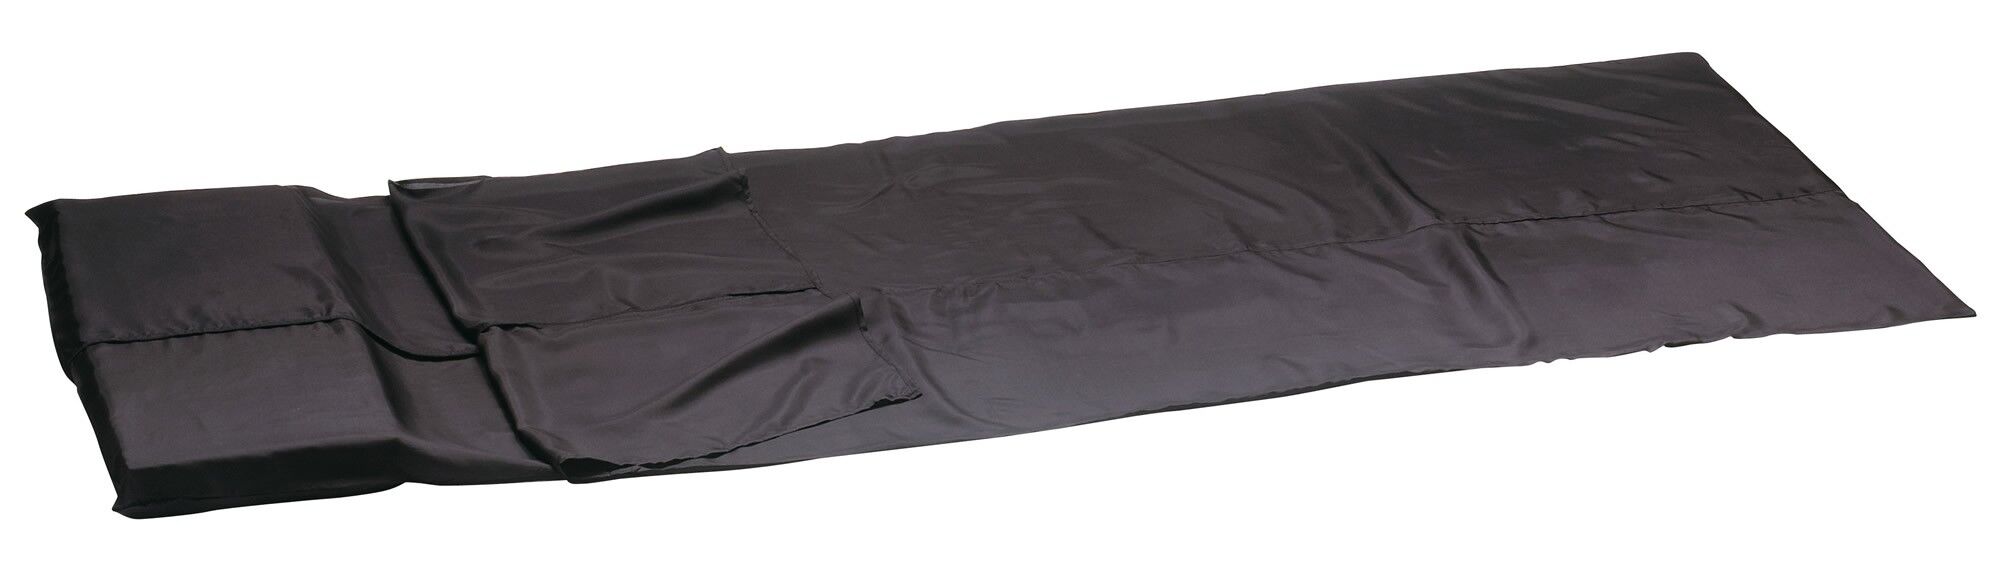 Camp Lining Silk - Sleeping bag liner